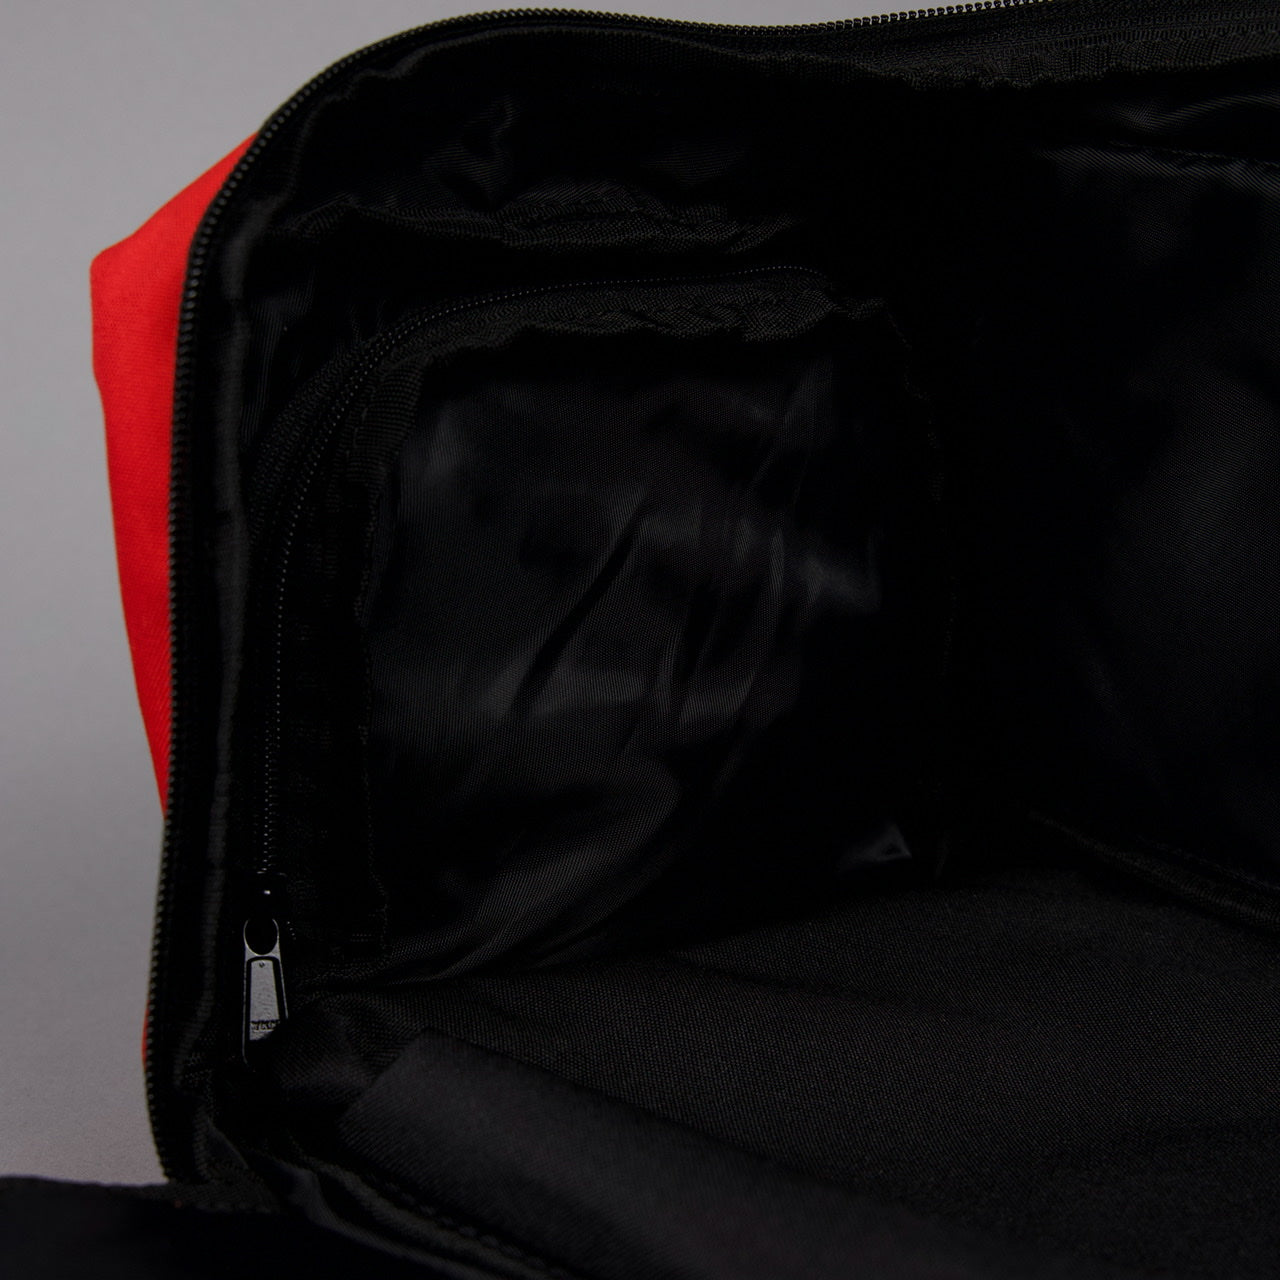 20L Mini Duffle Bag Elite Red